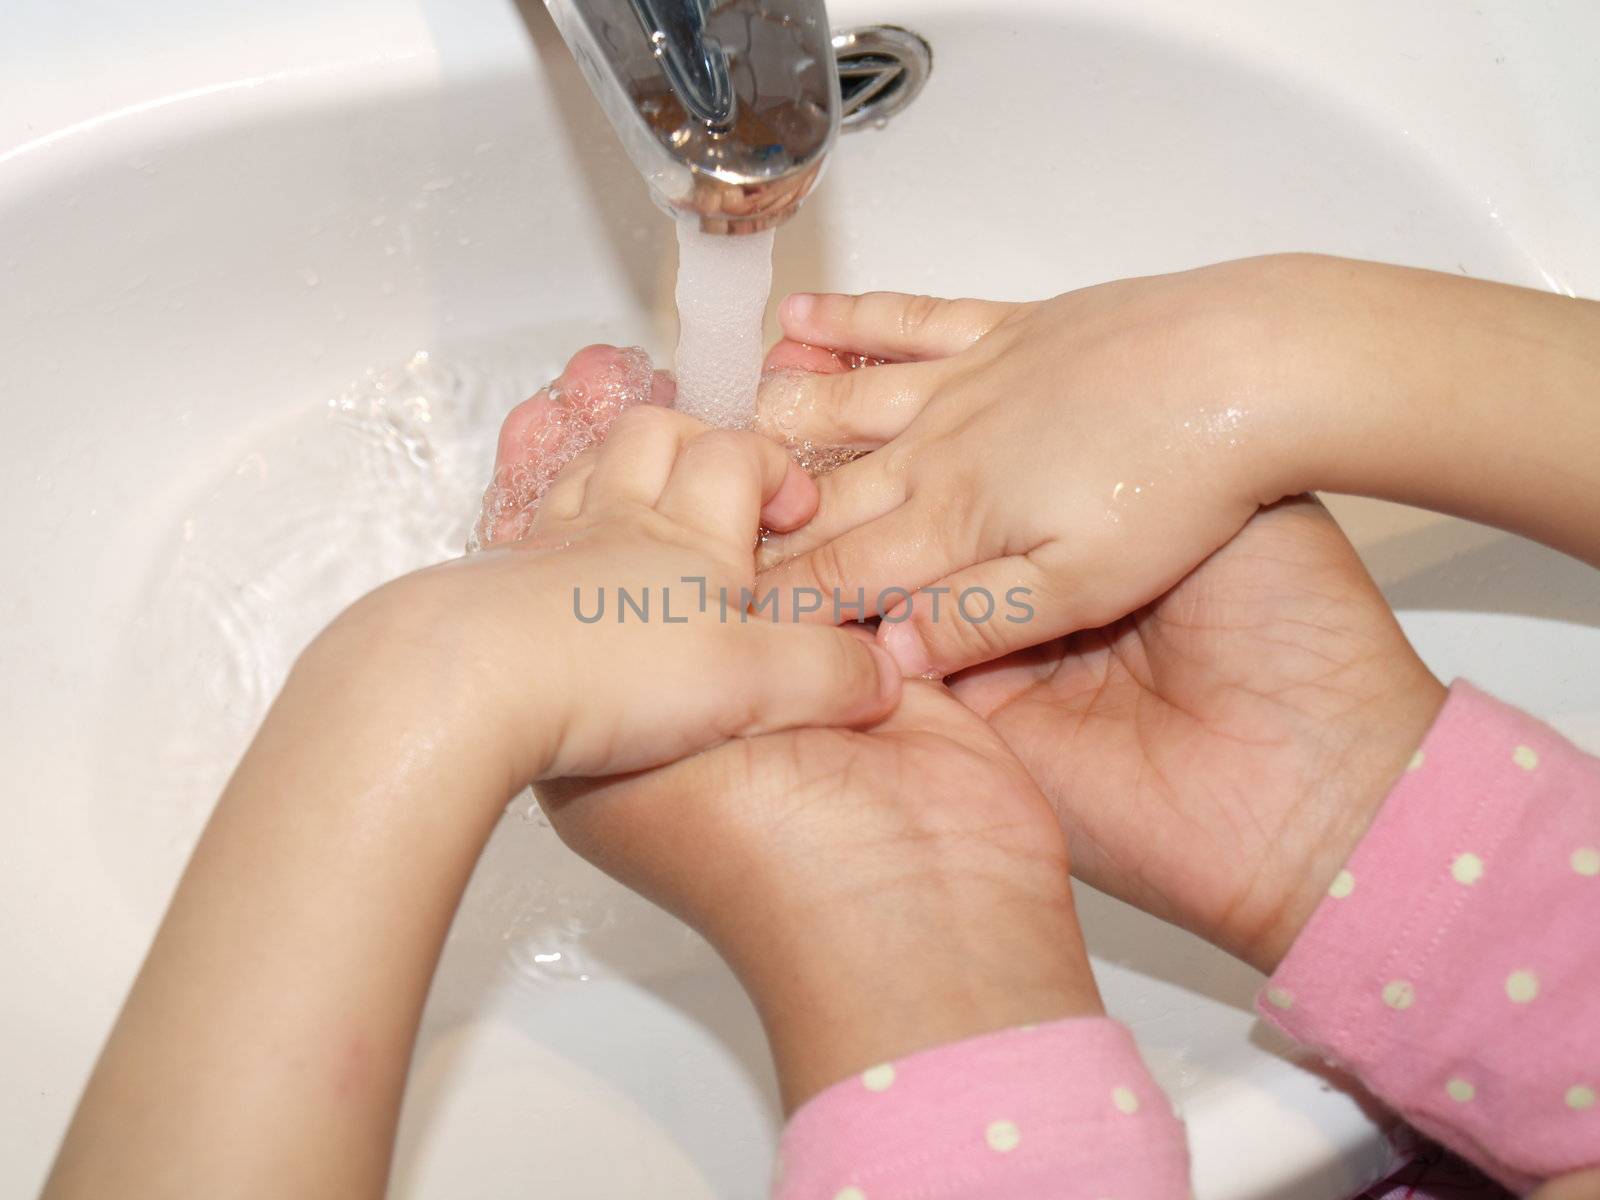 kids washing hands